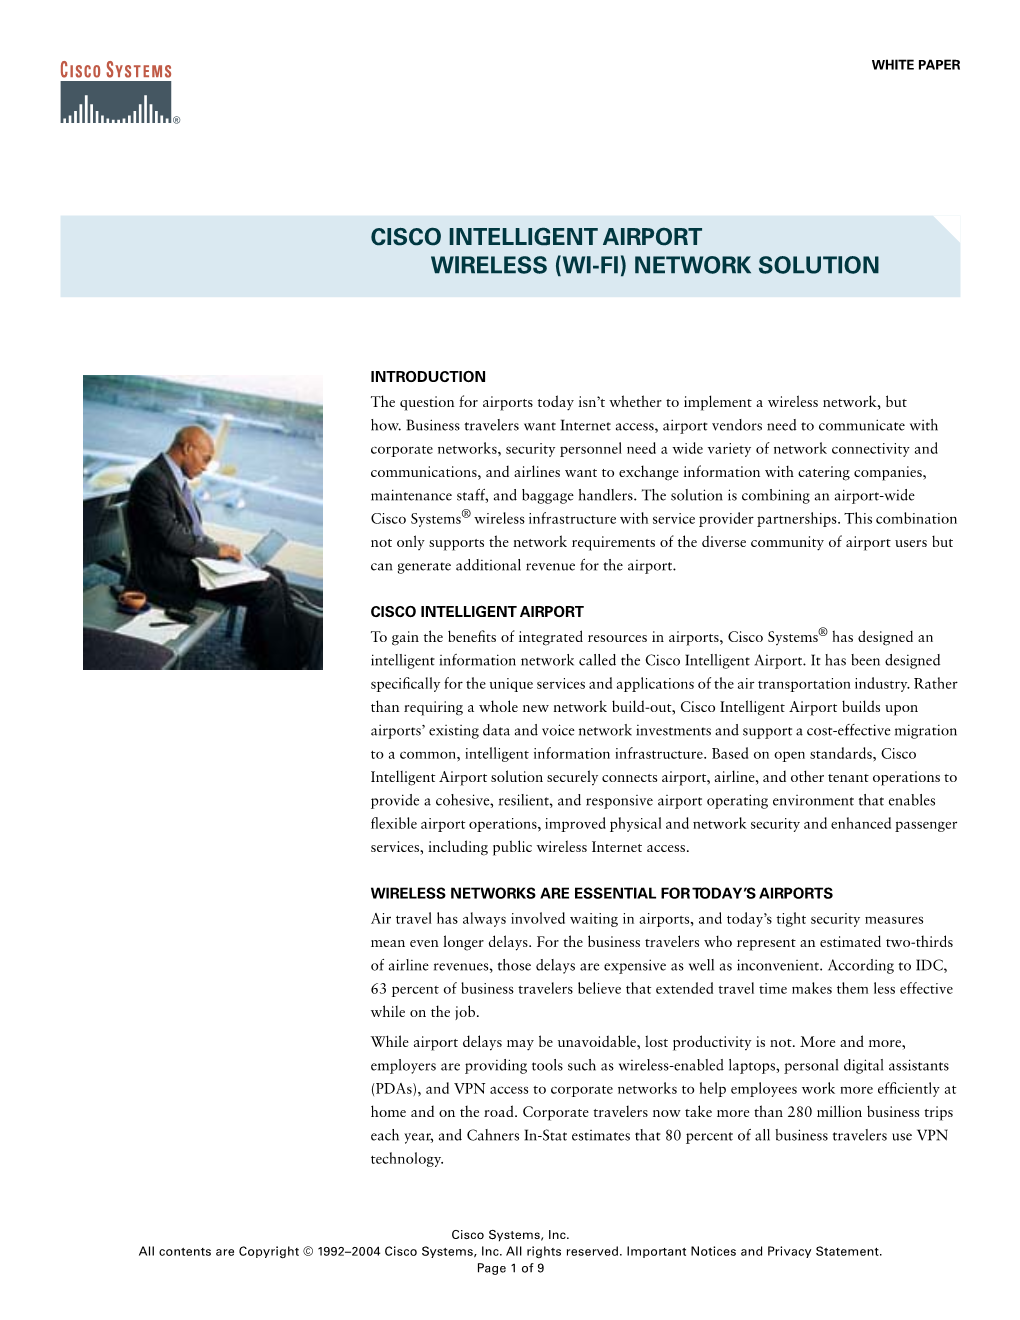 Cisco Intelligent Airport Wireless (Wi-Fi) Network Solution